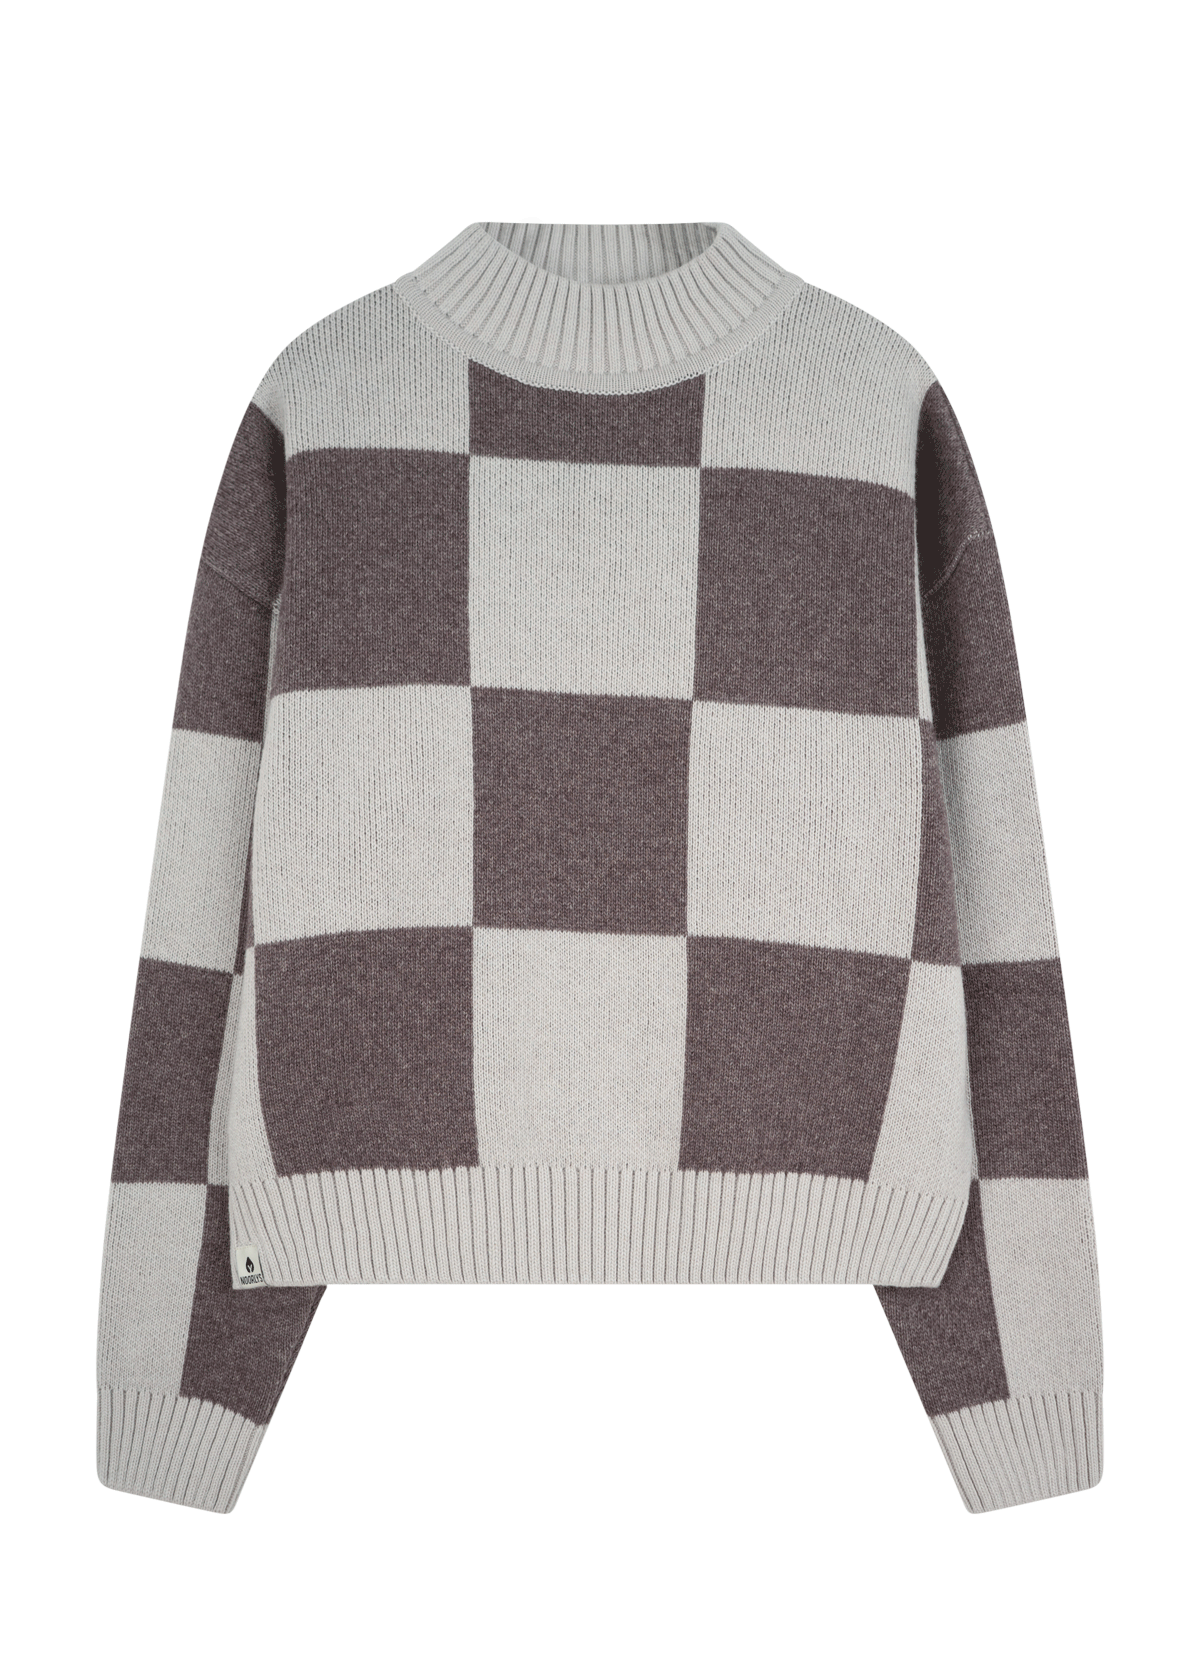 Strick-Sweater KARO OysterGrey/Schokolade